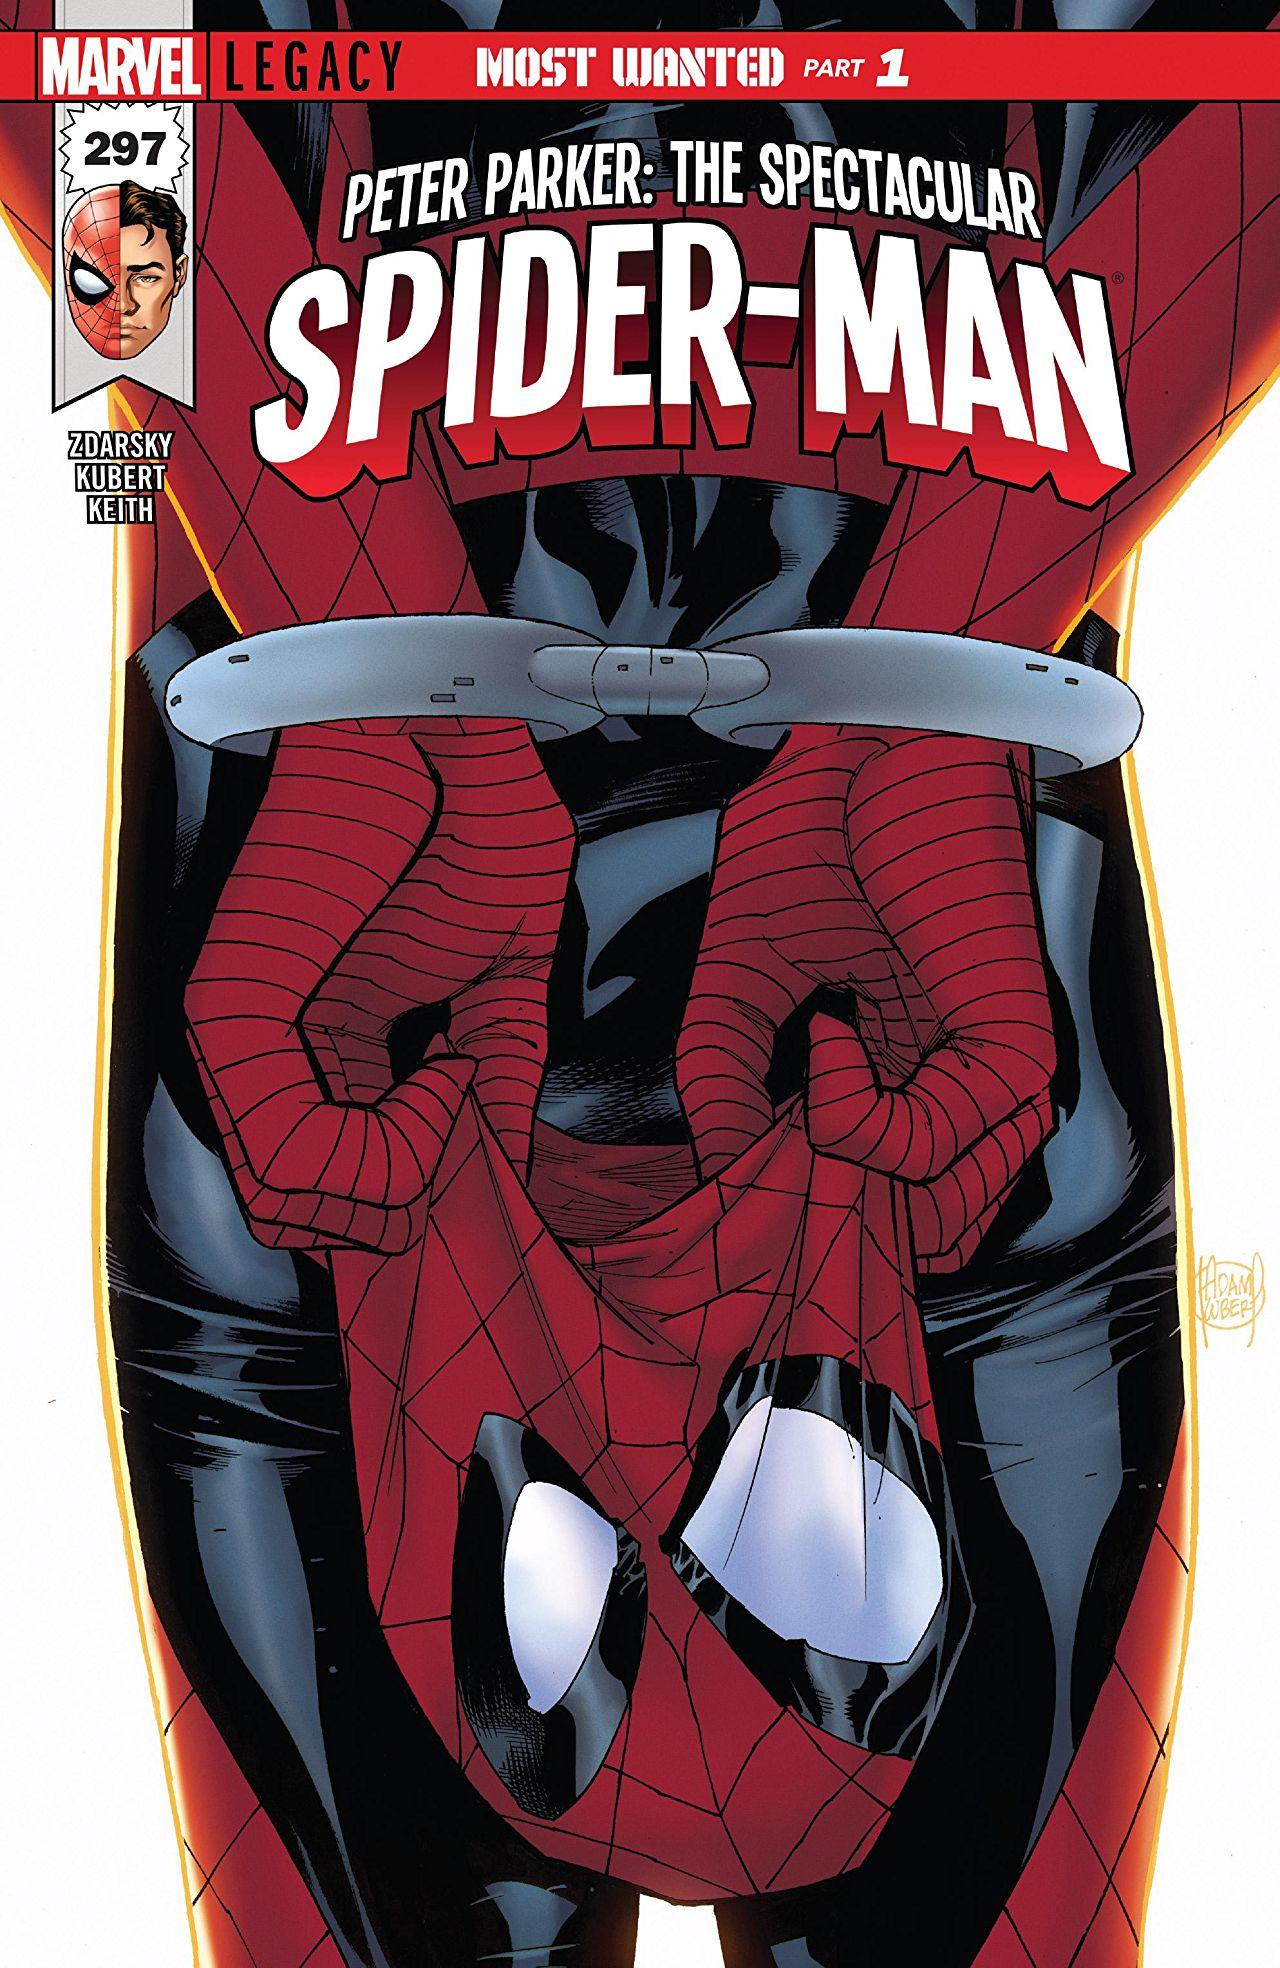 Peter Parker: The Spectacular Spider-Man Vol. 1 #297